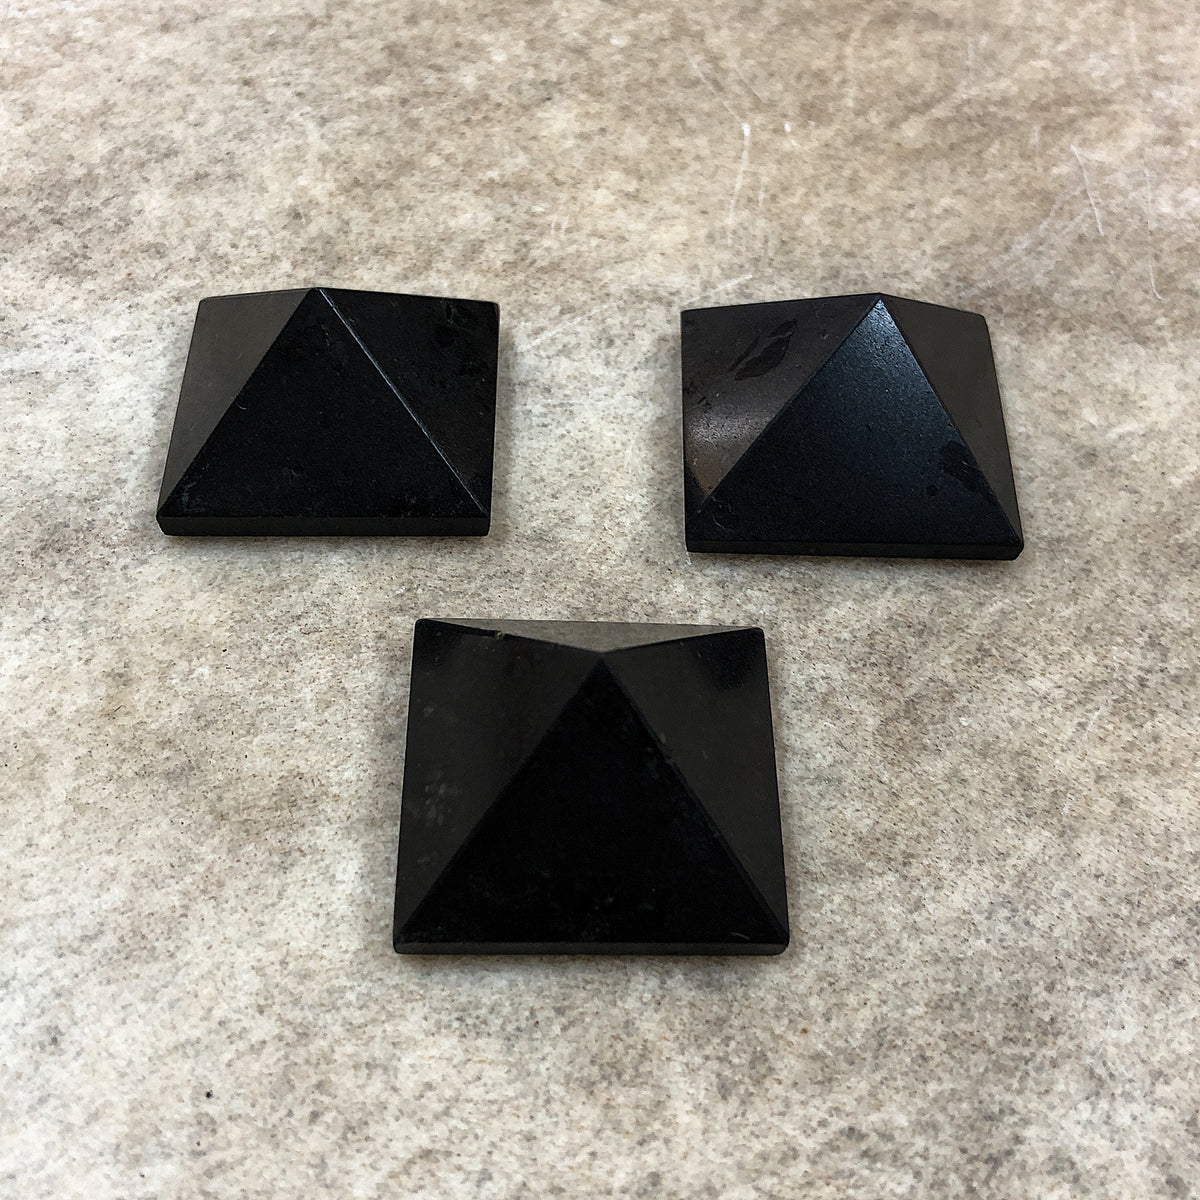 Shot of a group of three black tourmaline pyramids